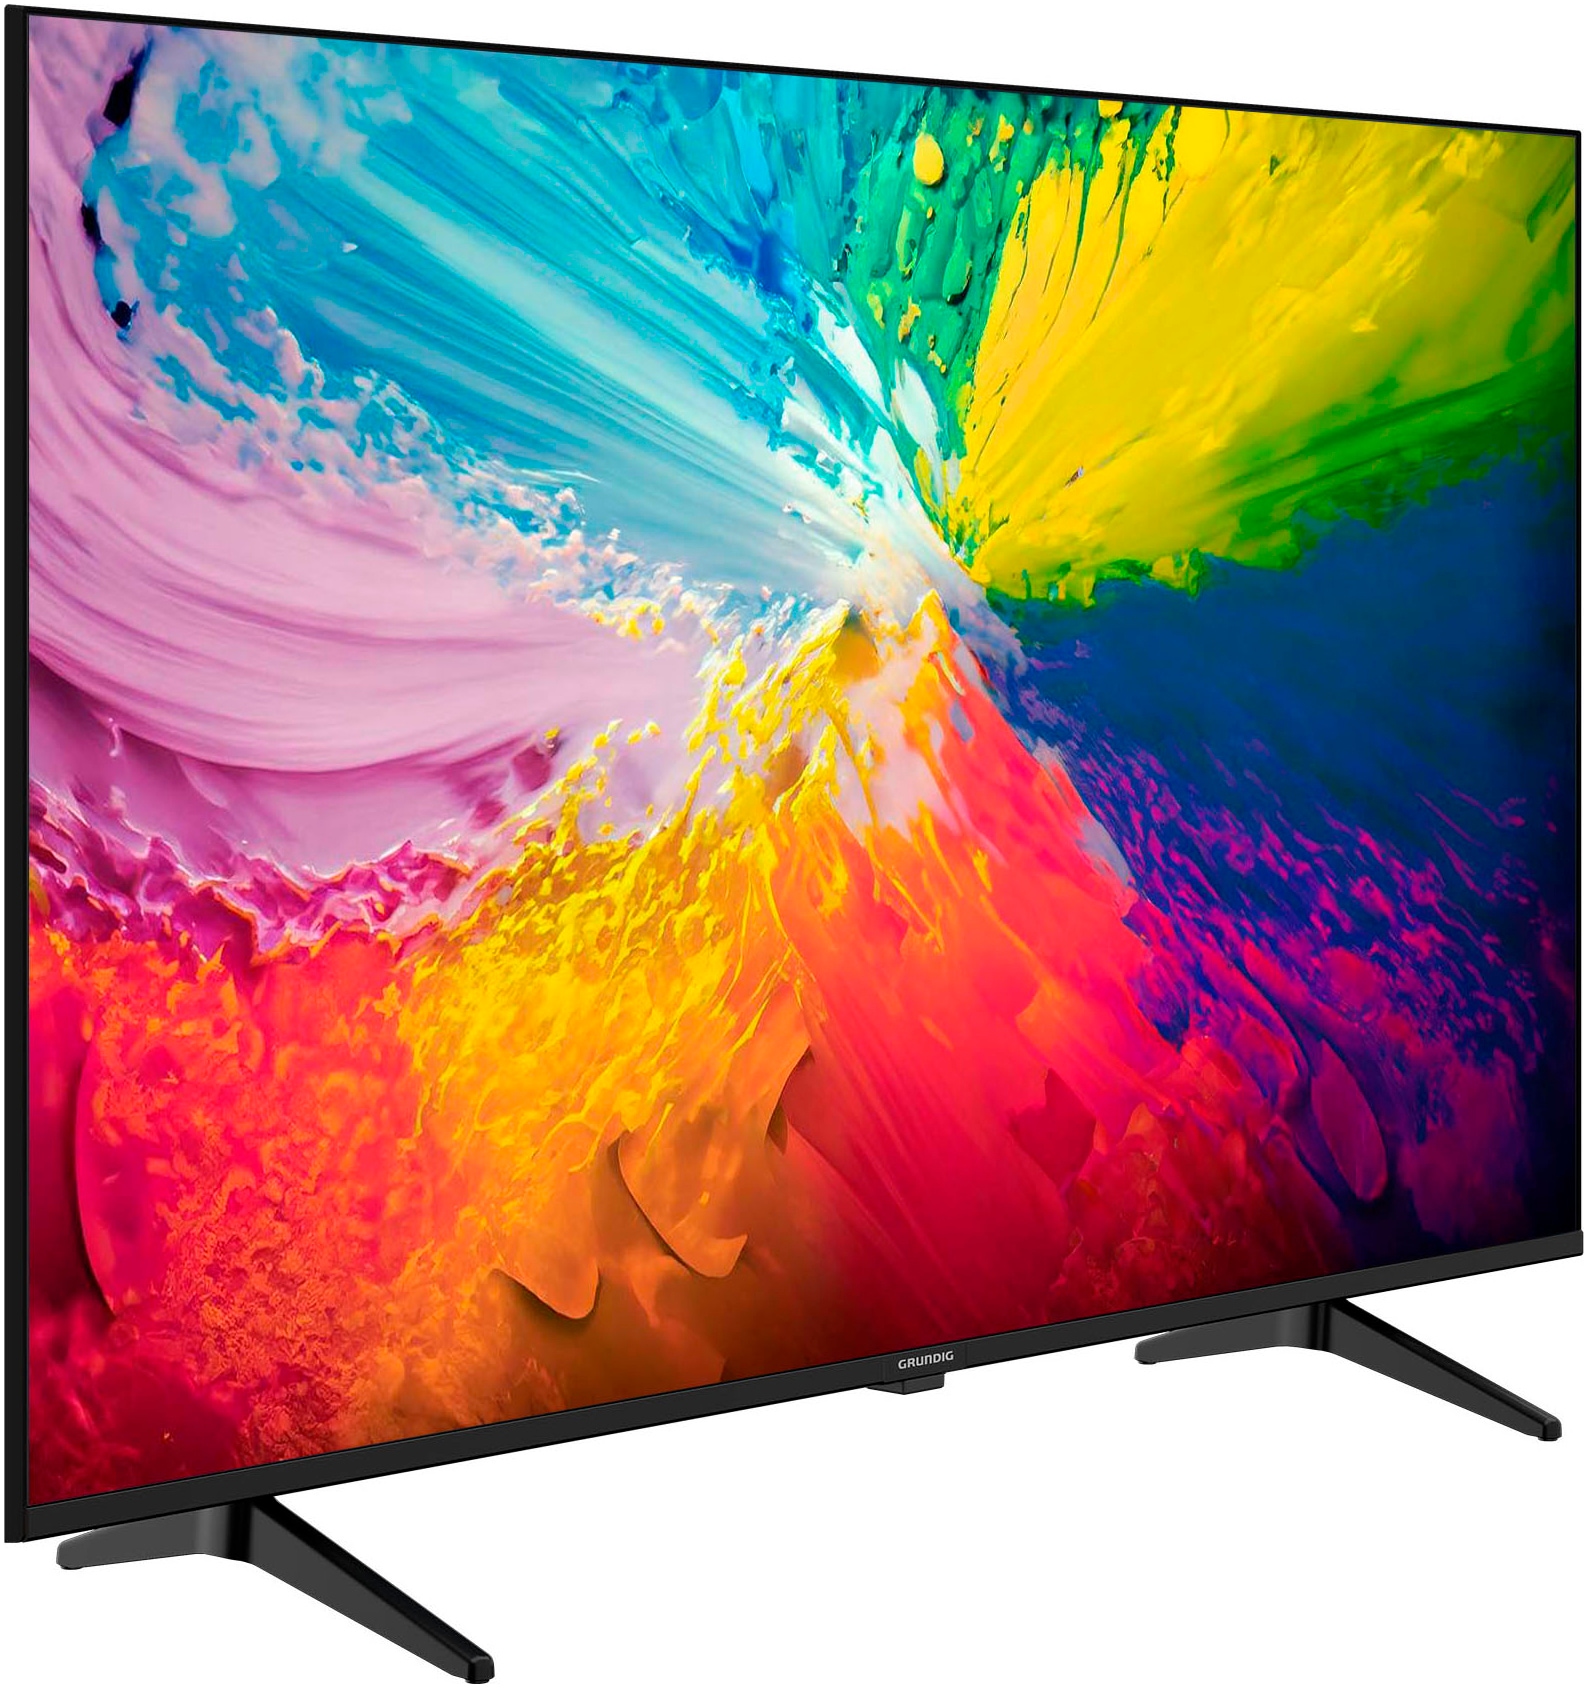 Grundig LED-Fernseher, 189 cm/75 Zoll, 4K Ultra HD, Android TV